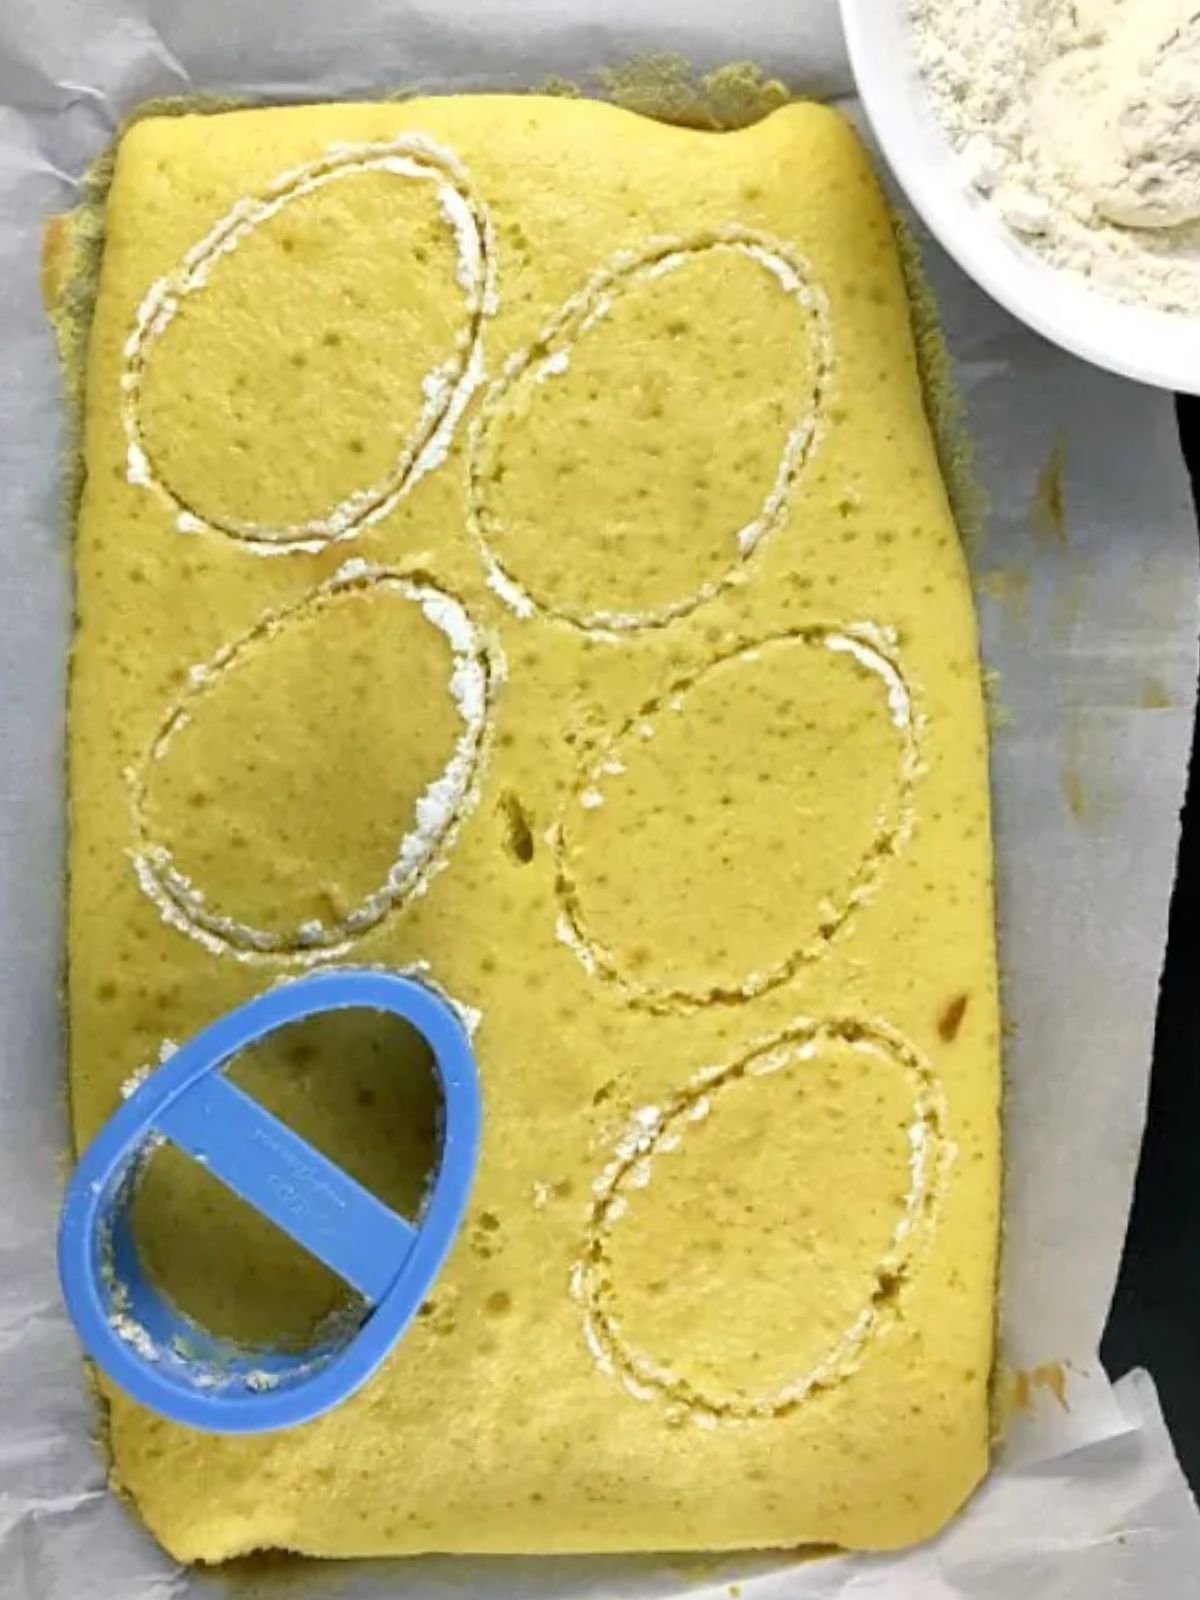 blue plastic egg cutter on top of vanilla cake.